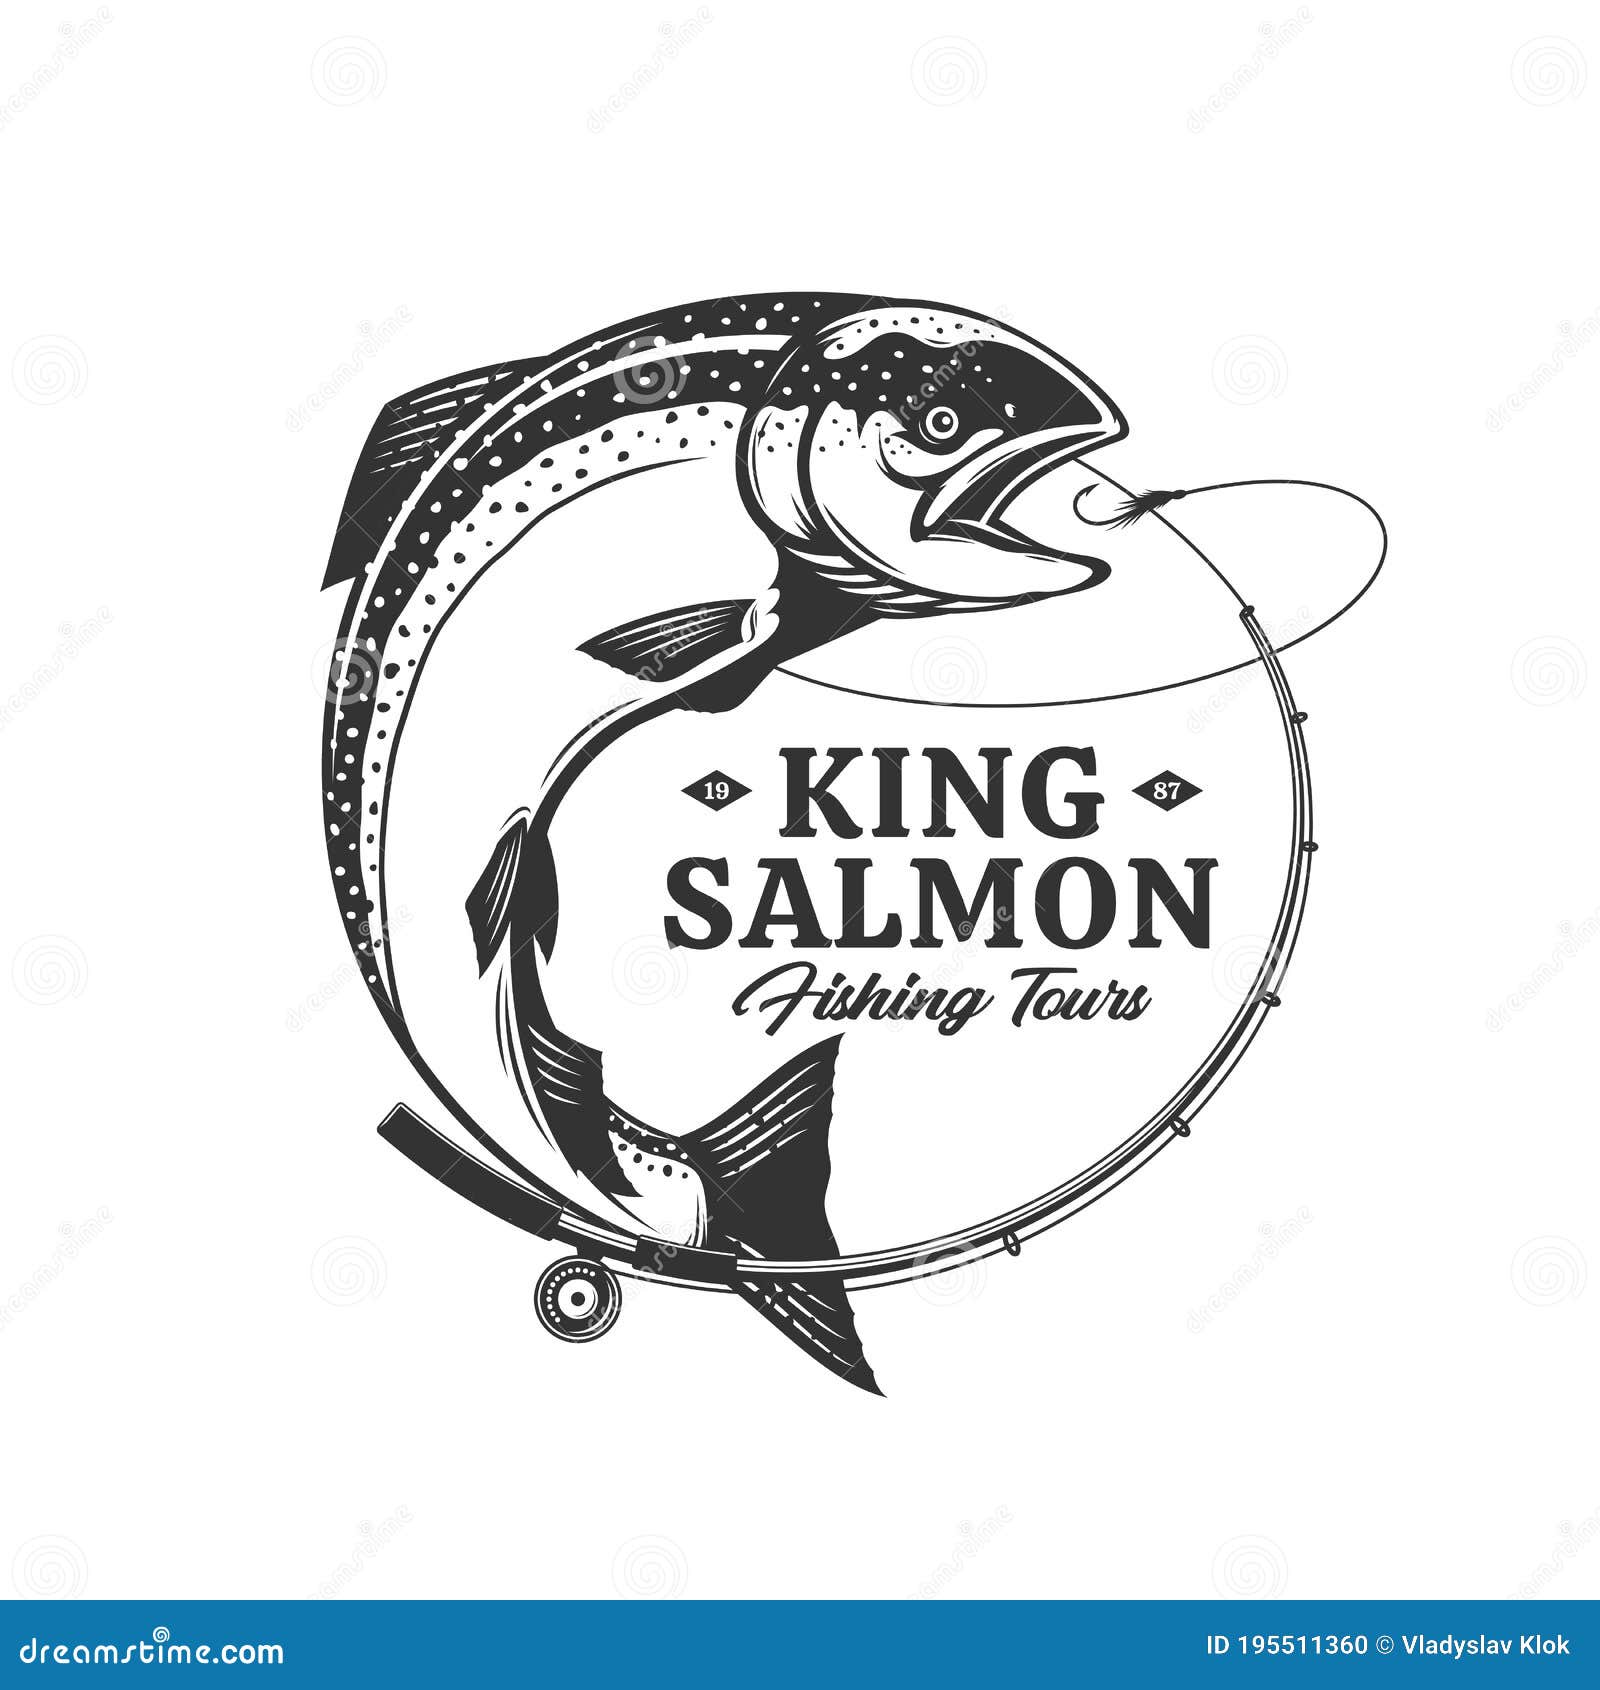 Vector fishing tour logo stock vector. Illustration of aquatic - 195511360